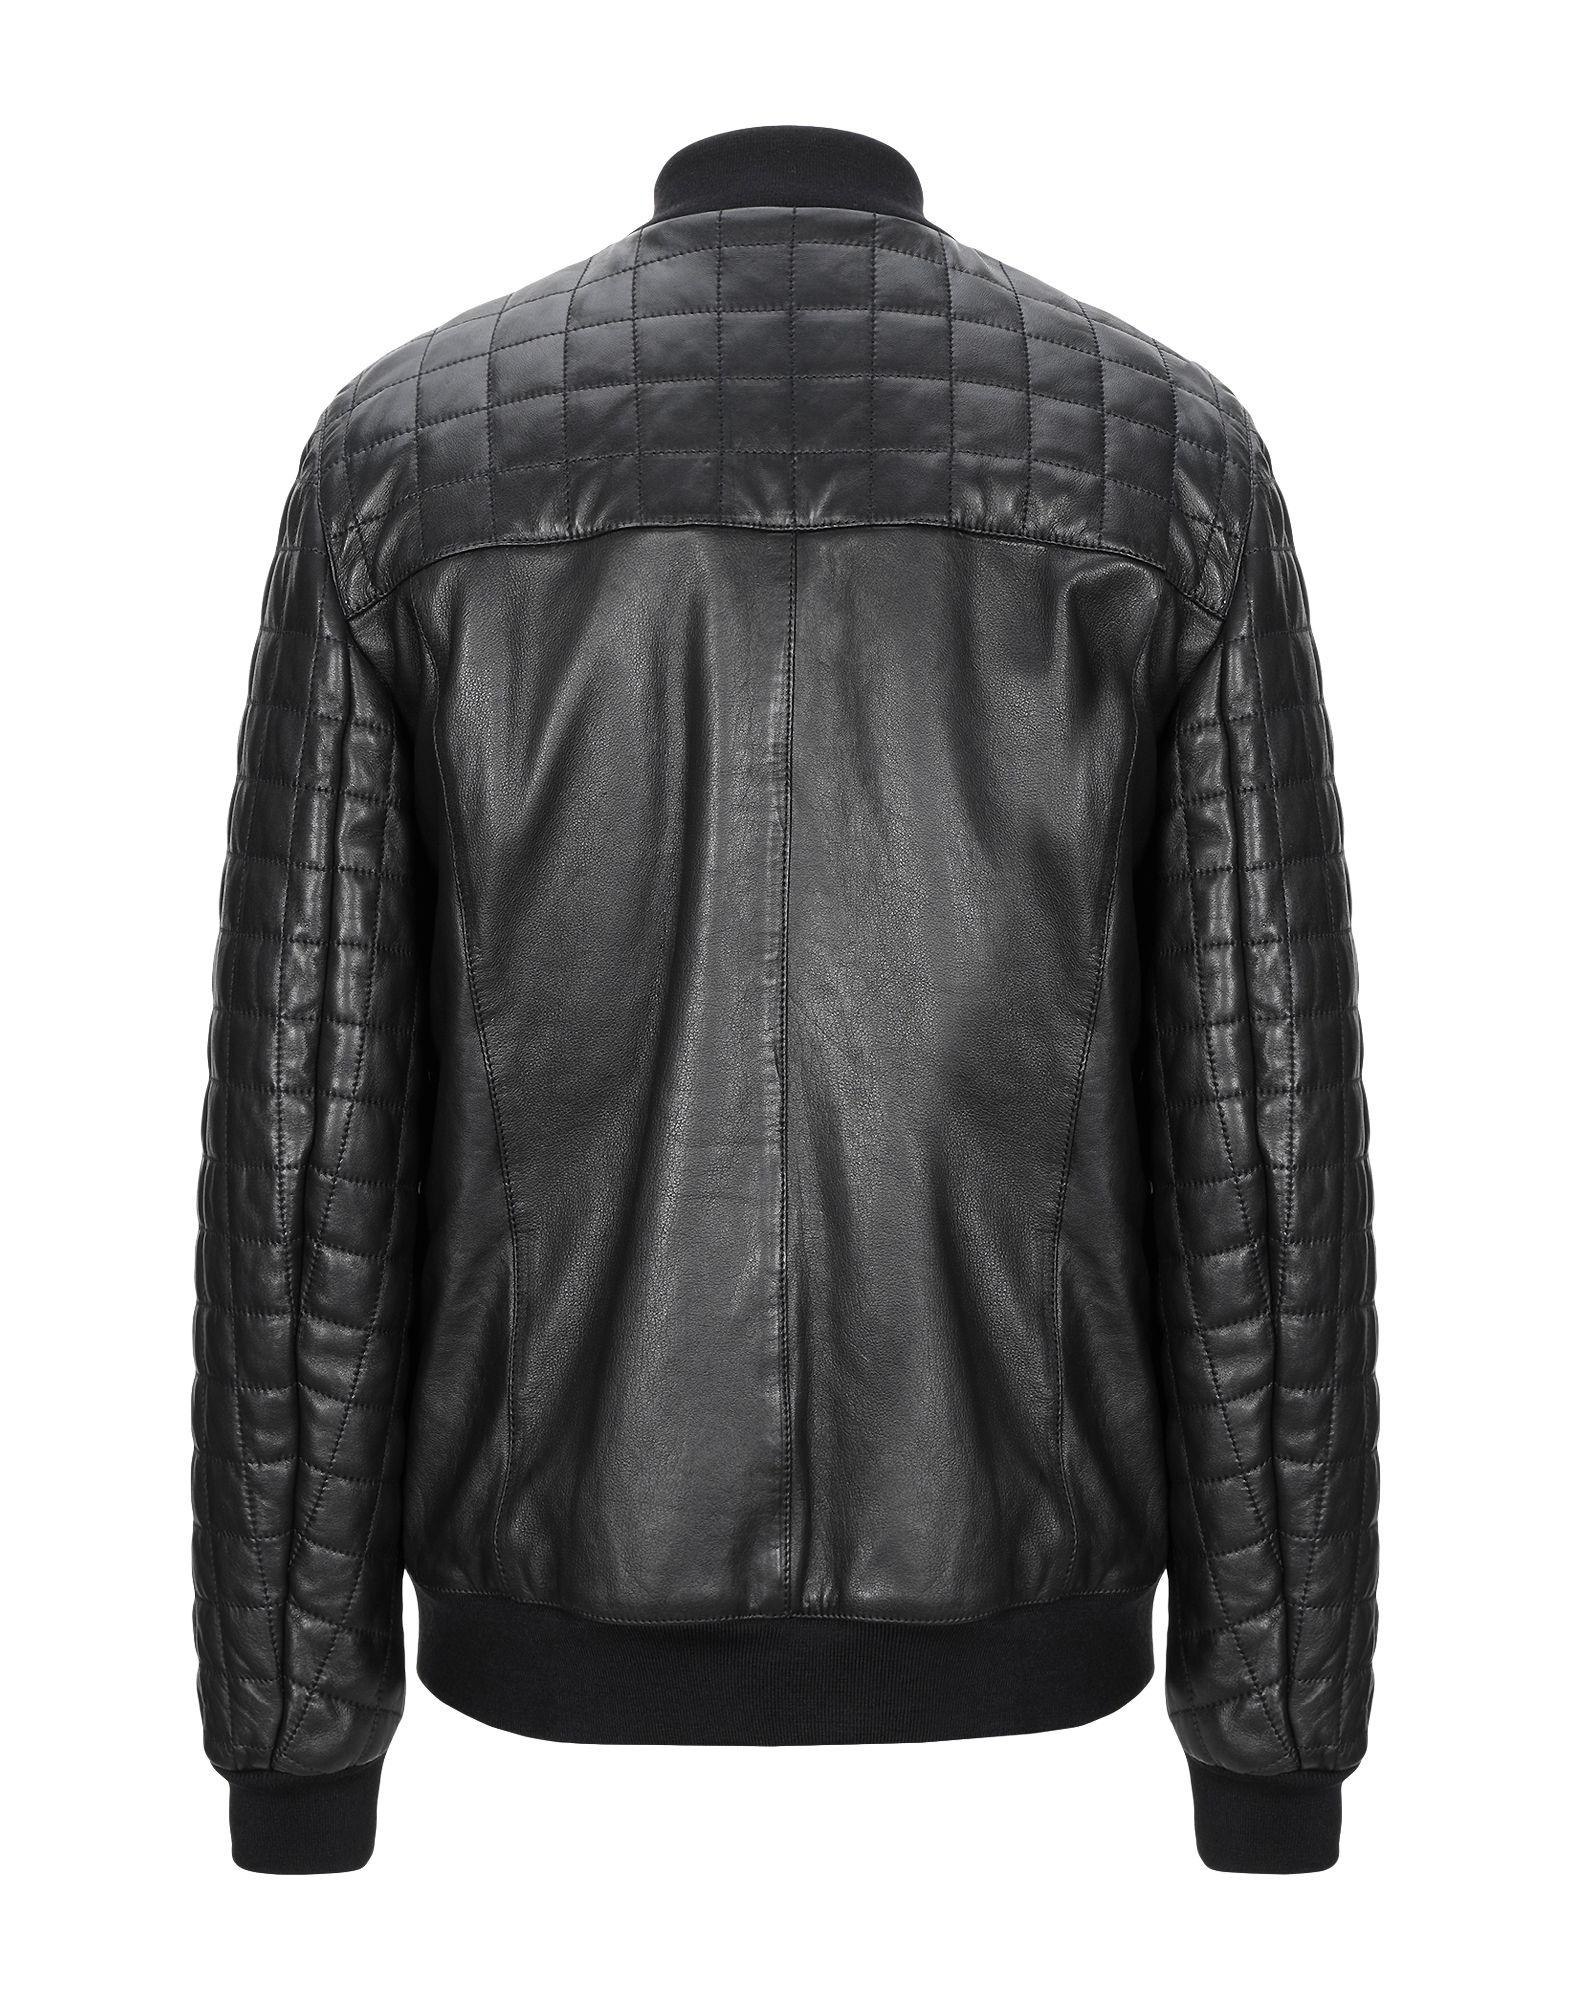 Iceberg Leather Jacket in Black for Men - Lyst